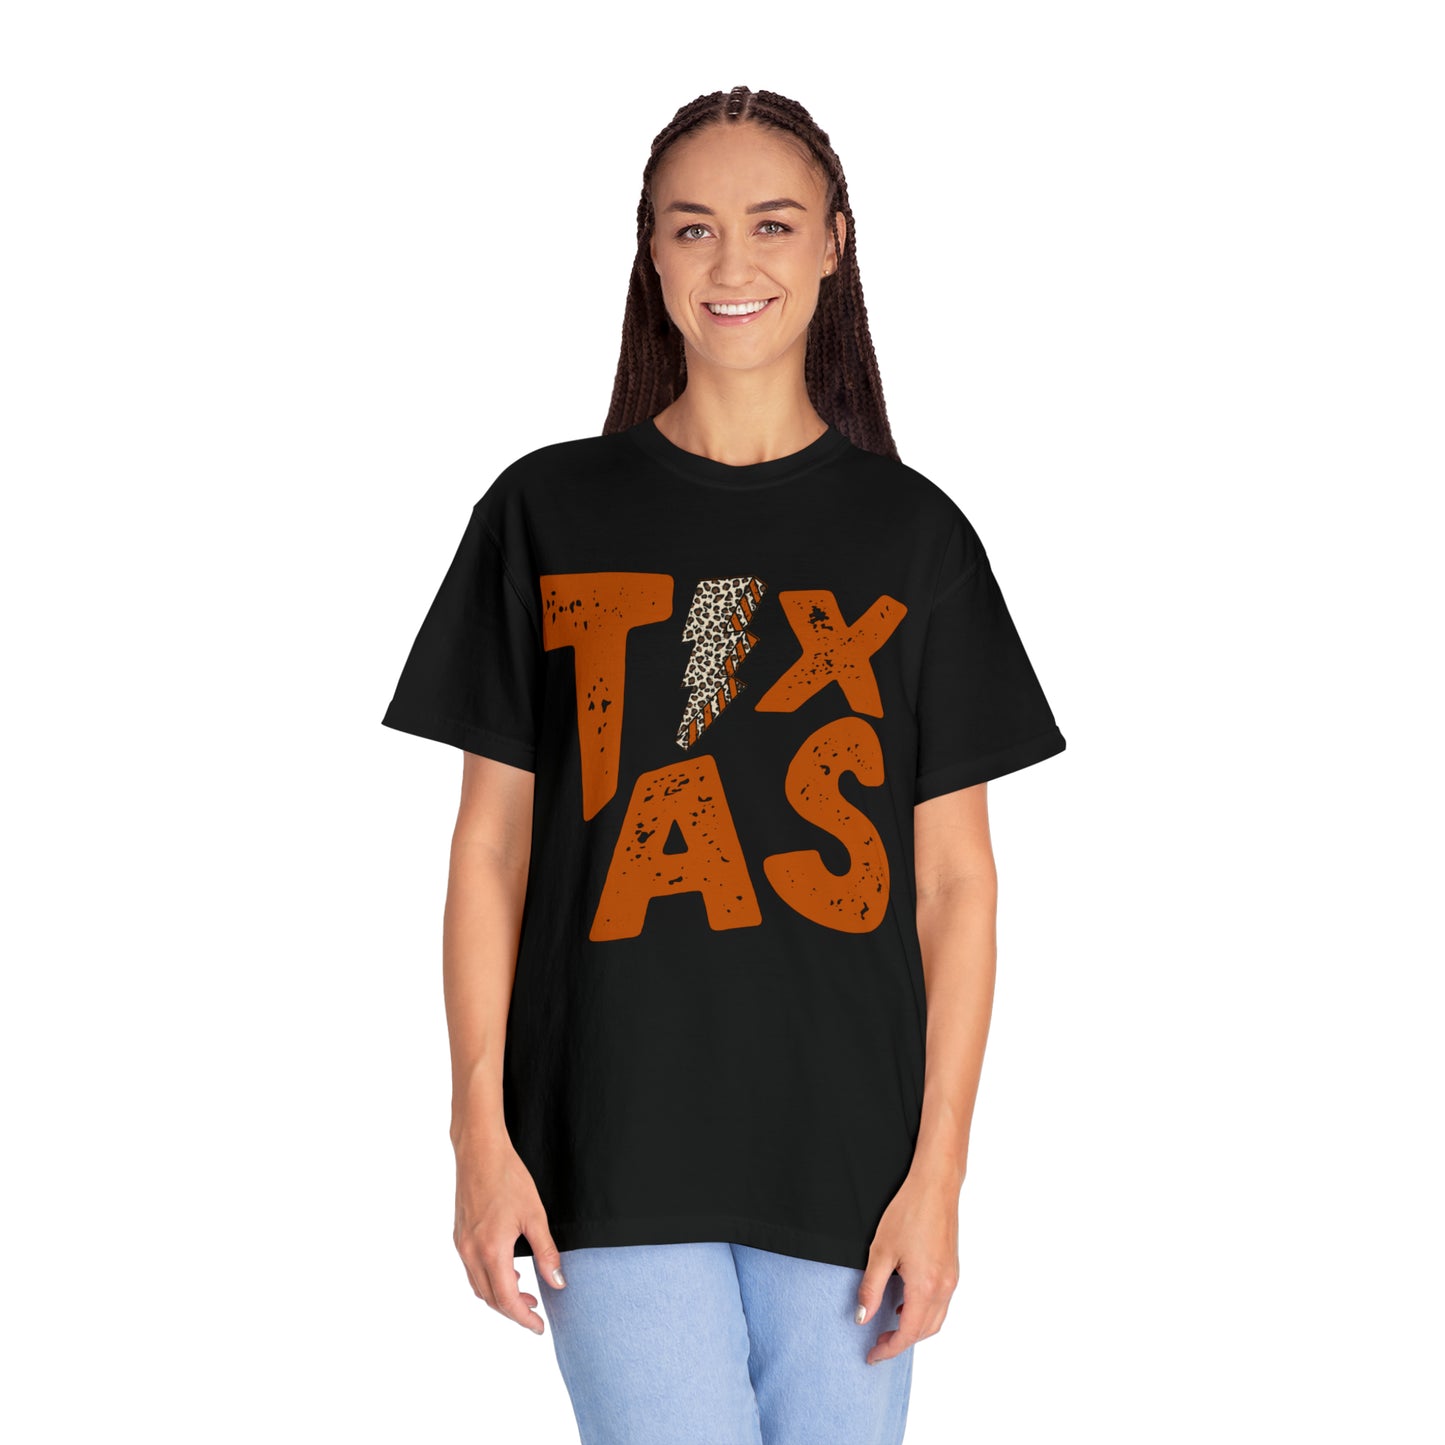 Texas Lightning Bolt Shirt